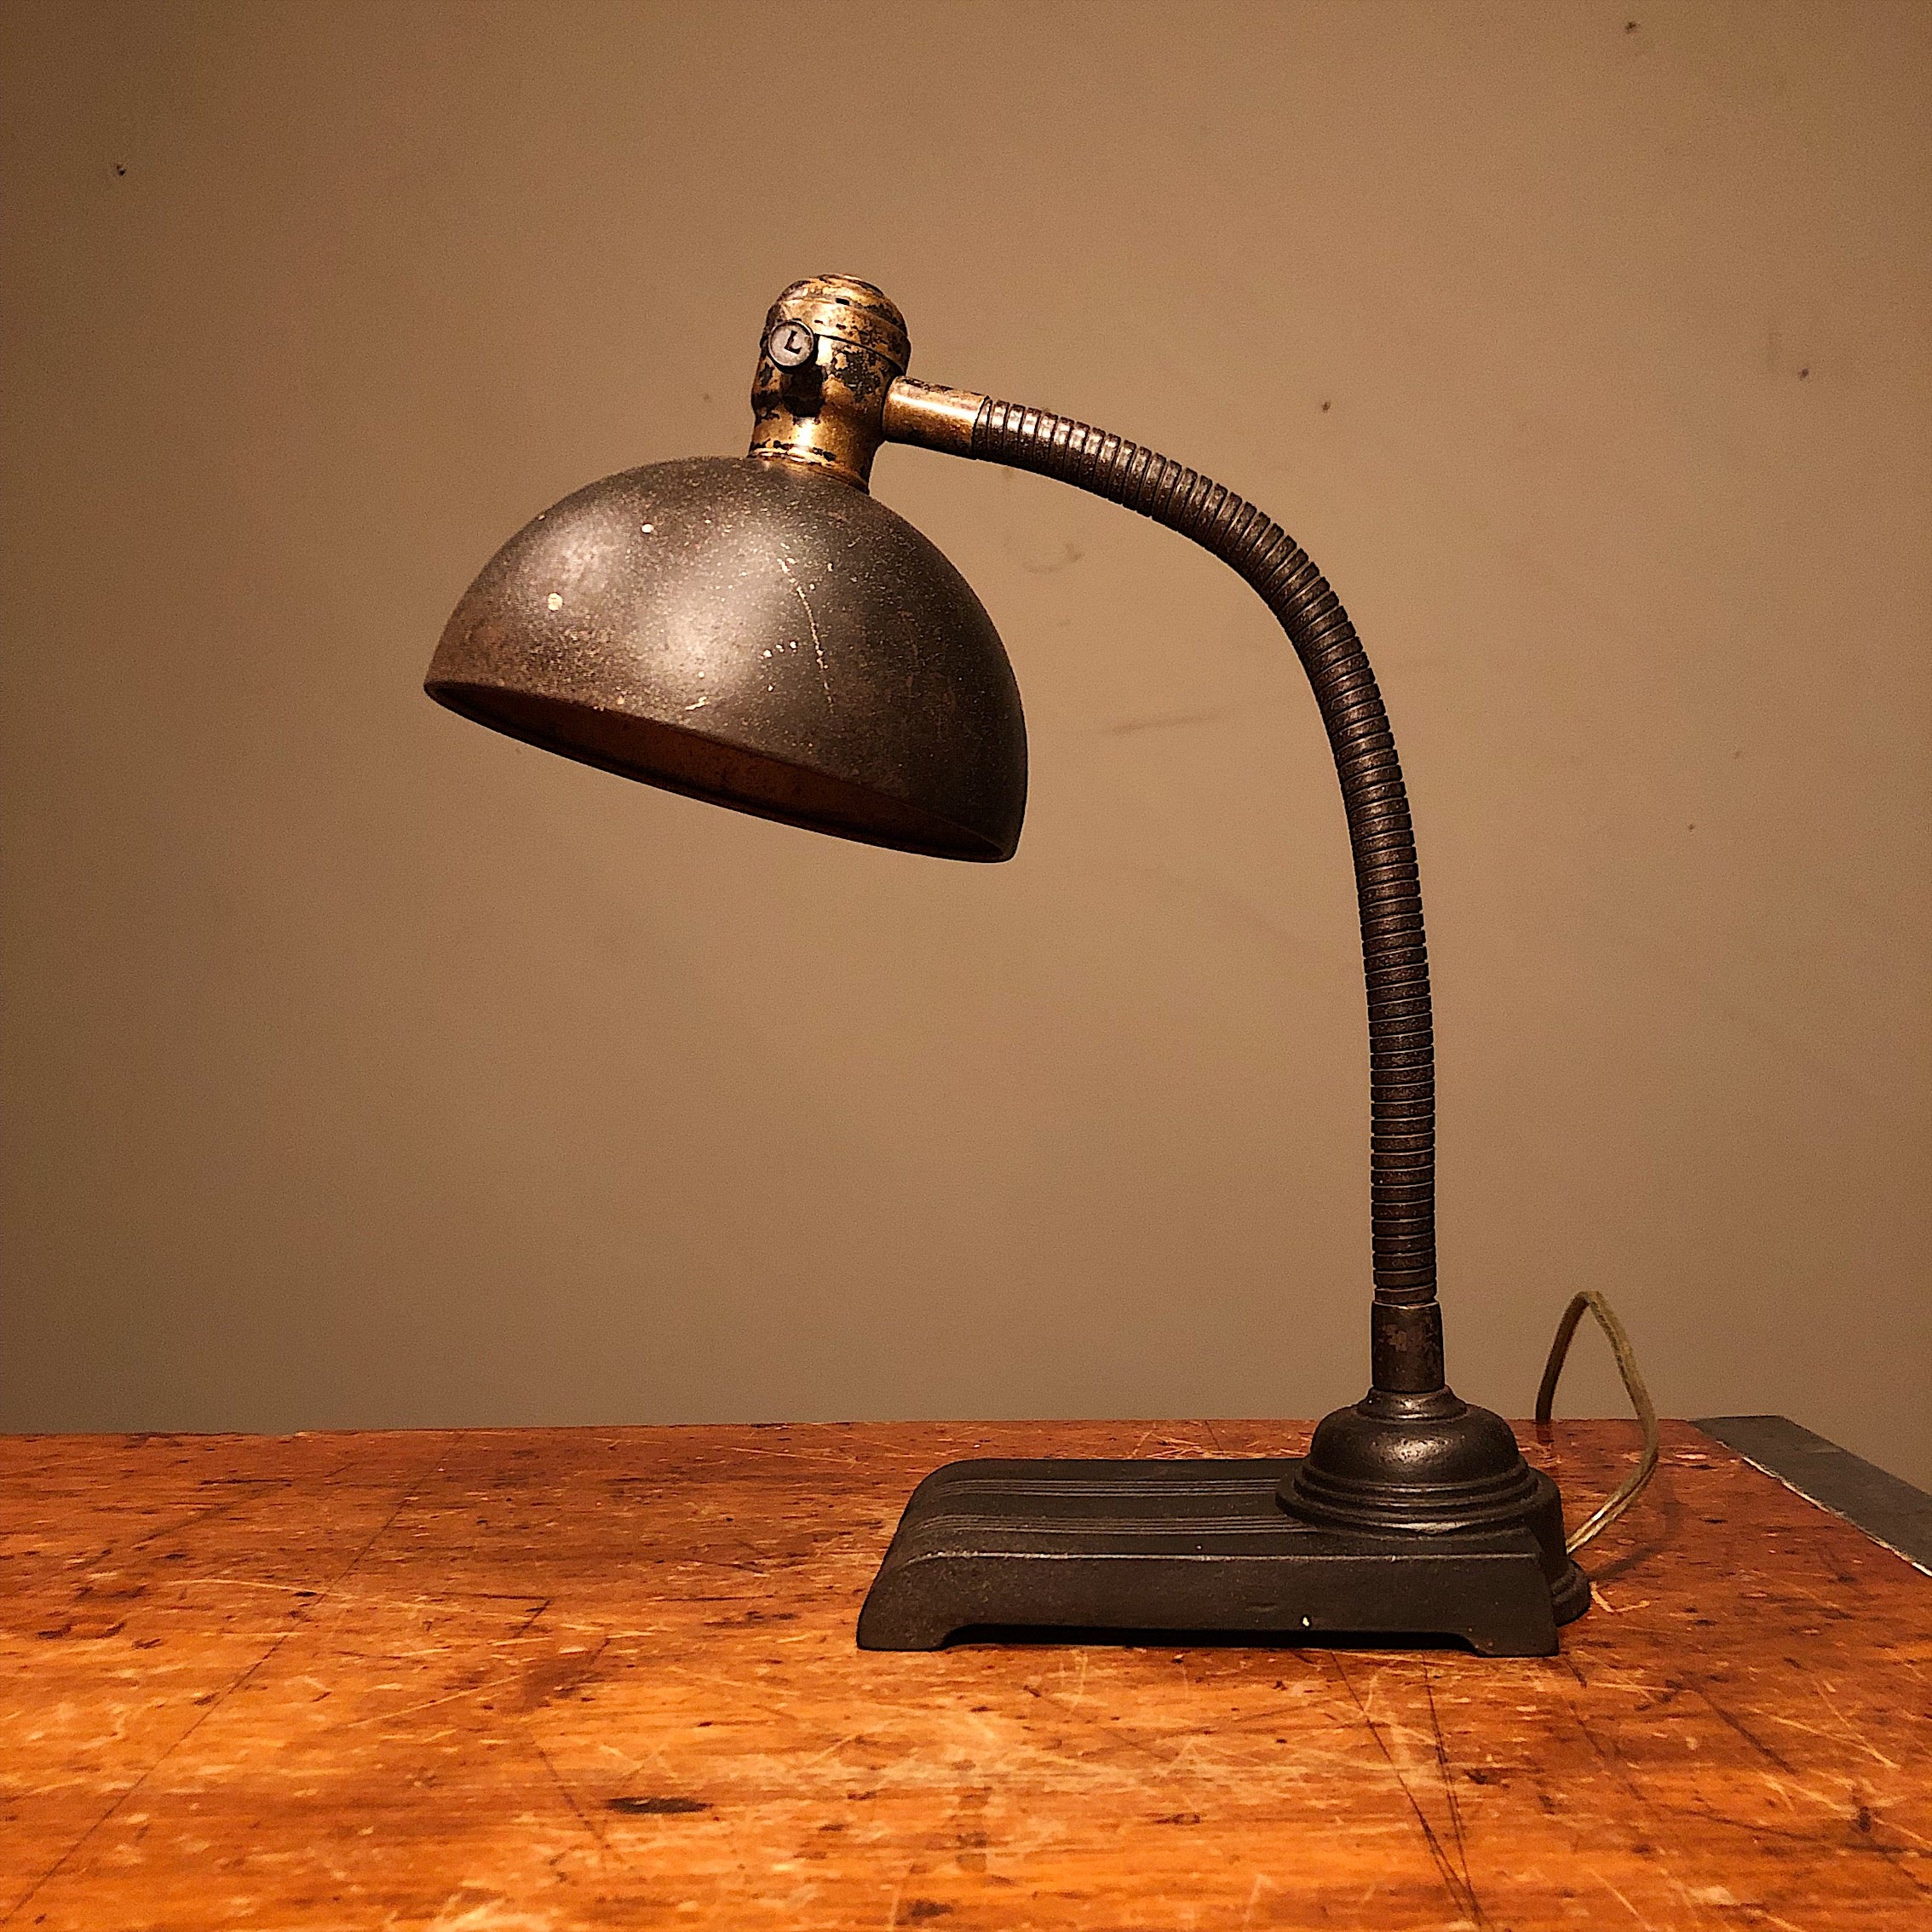 Antique Gooseneck Desk Lamp with Unusual Shade - 1920s Art Deco Period -  Gun Metal Light